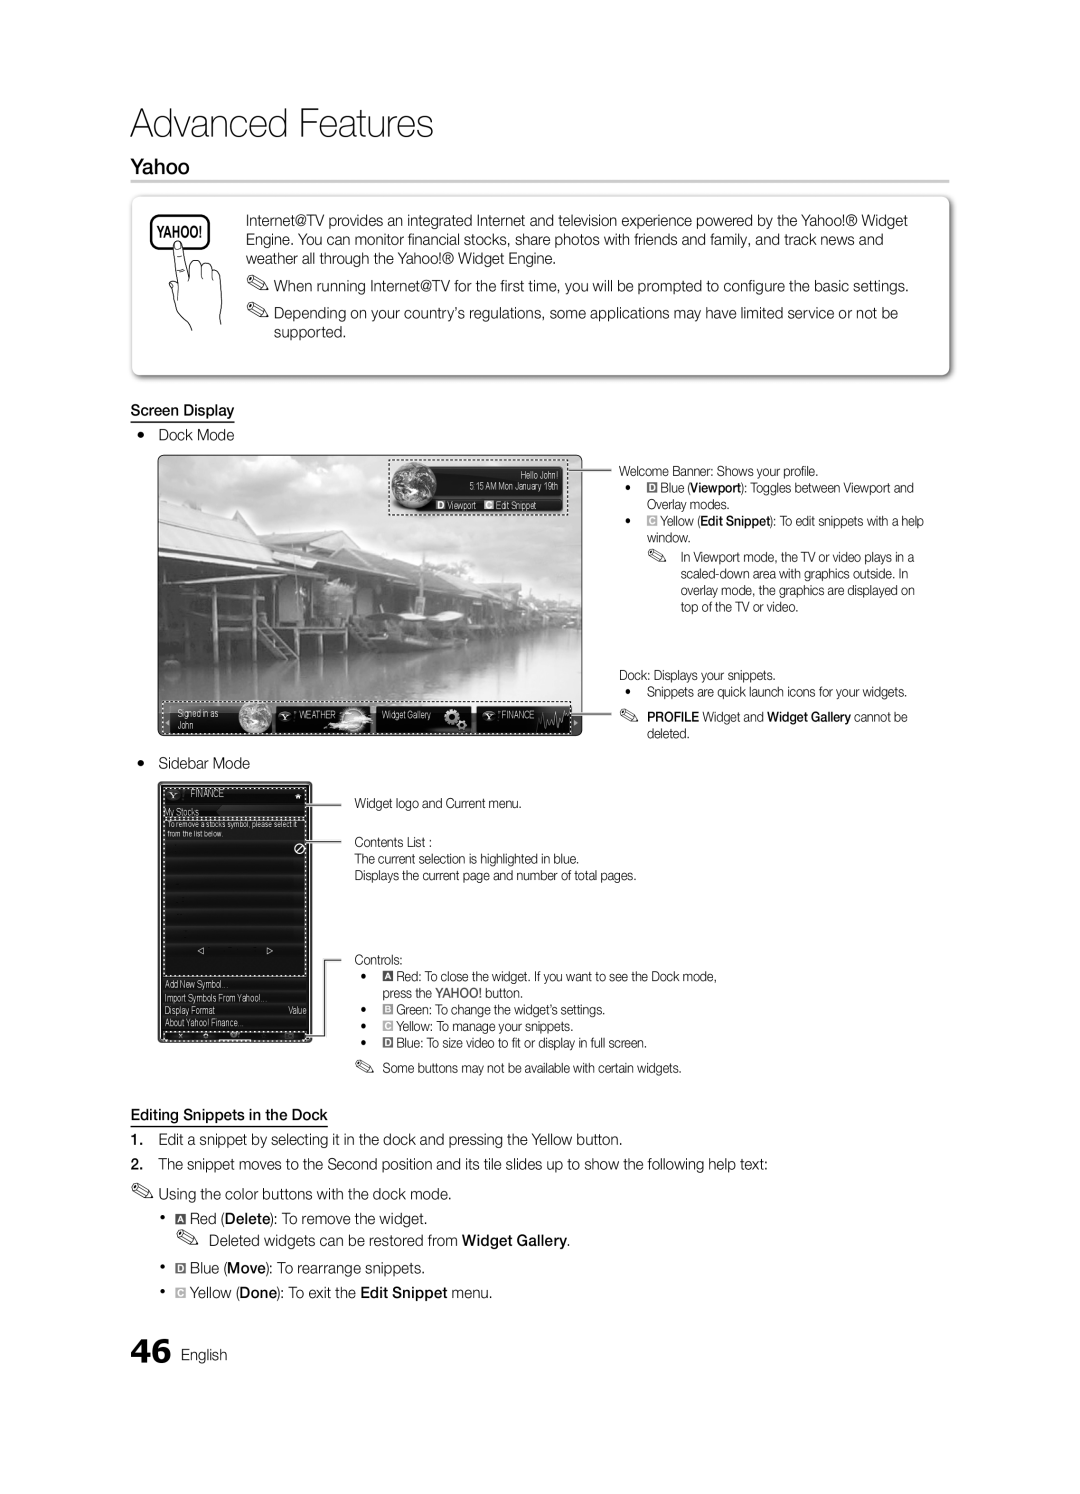 Samsung 6800 user manual Yahoo, Advanced Features 